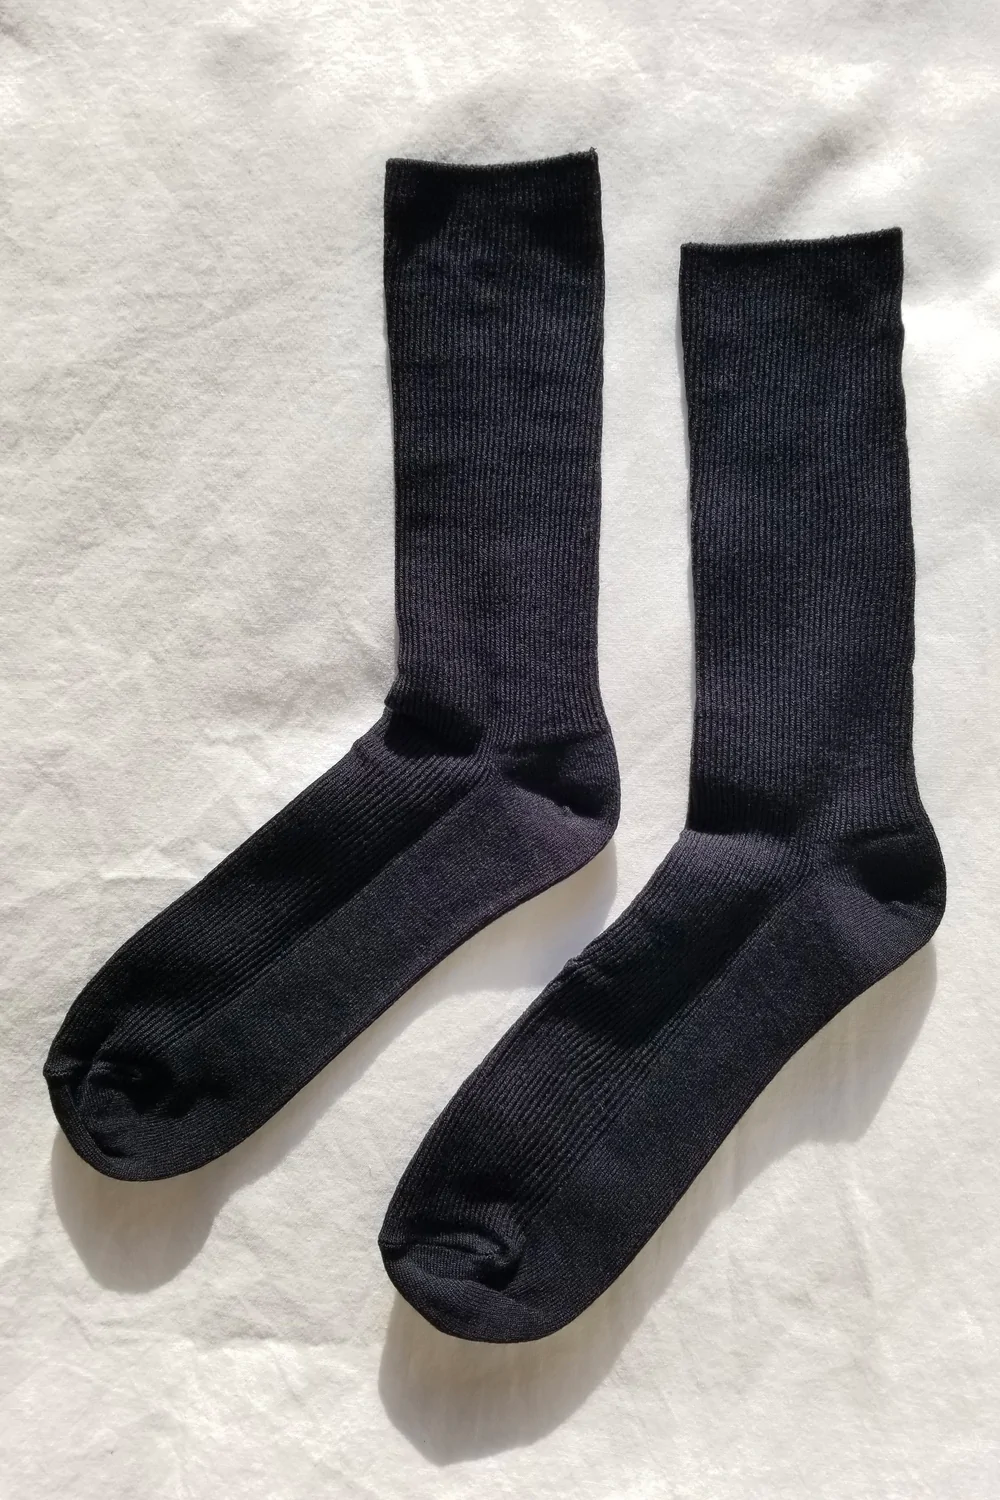 Product Image for Trouser Sock, Black